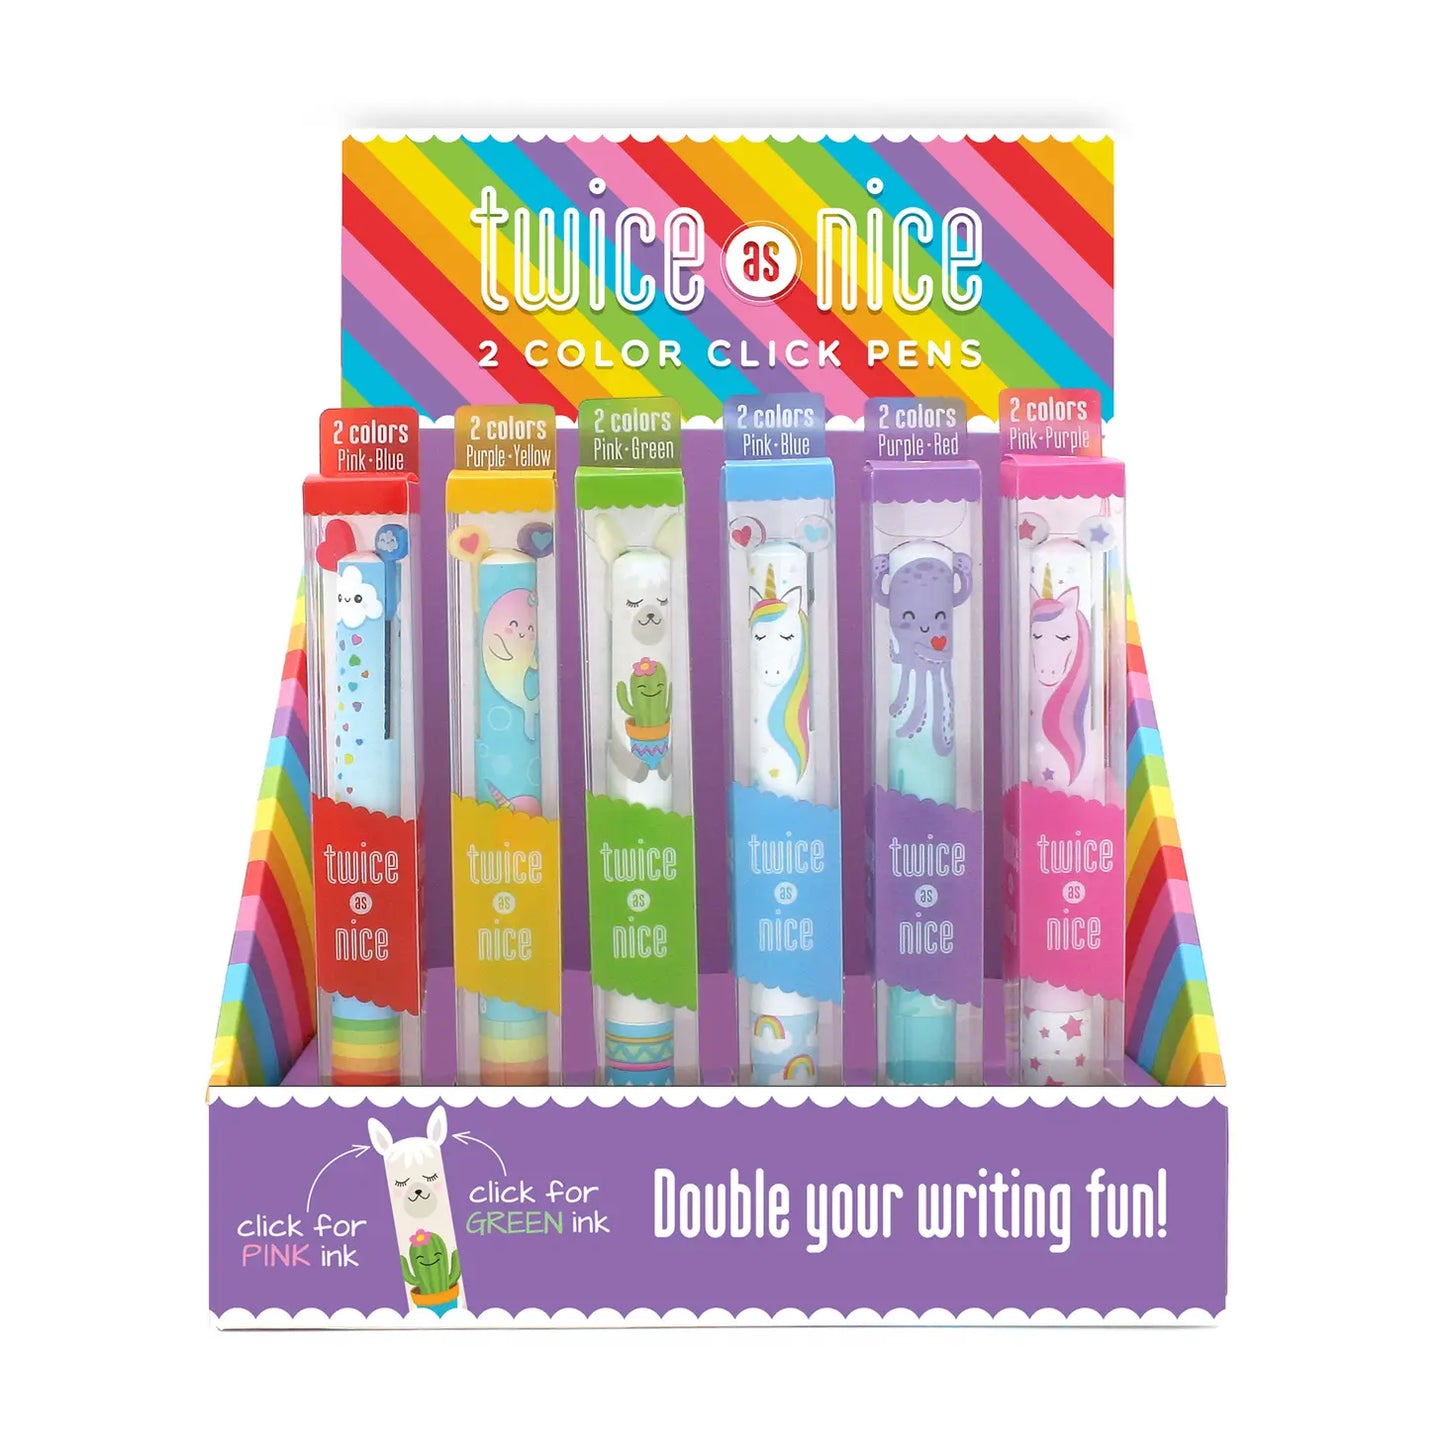 Twice as Nice Rainbow 2 Color Click Pen